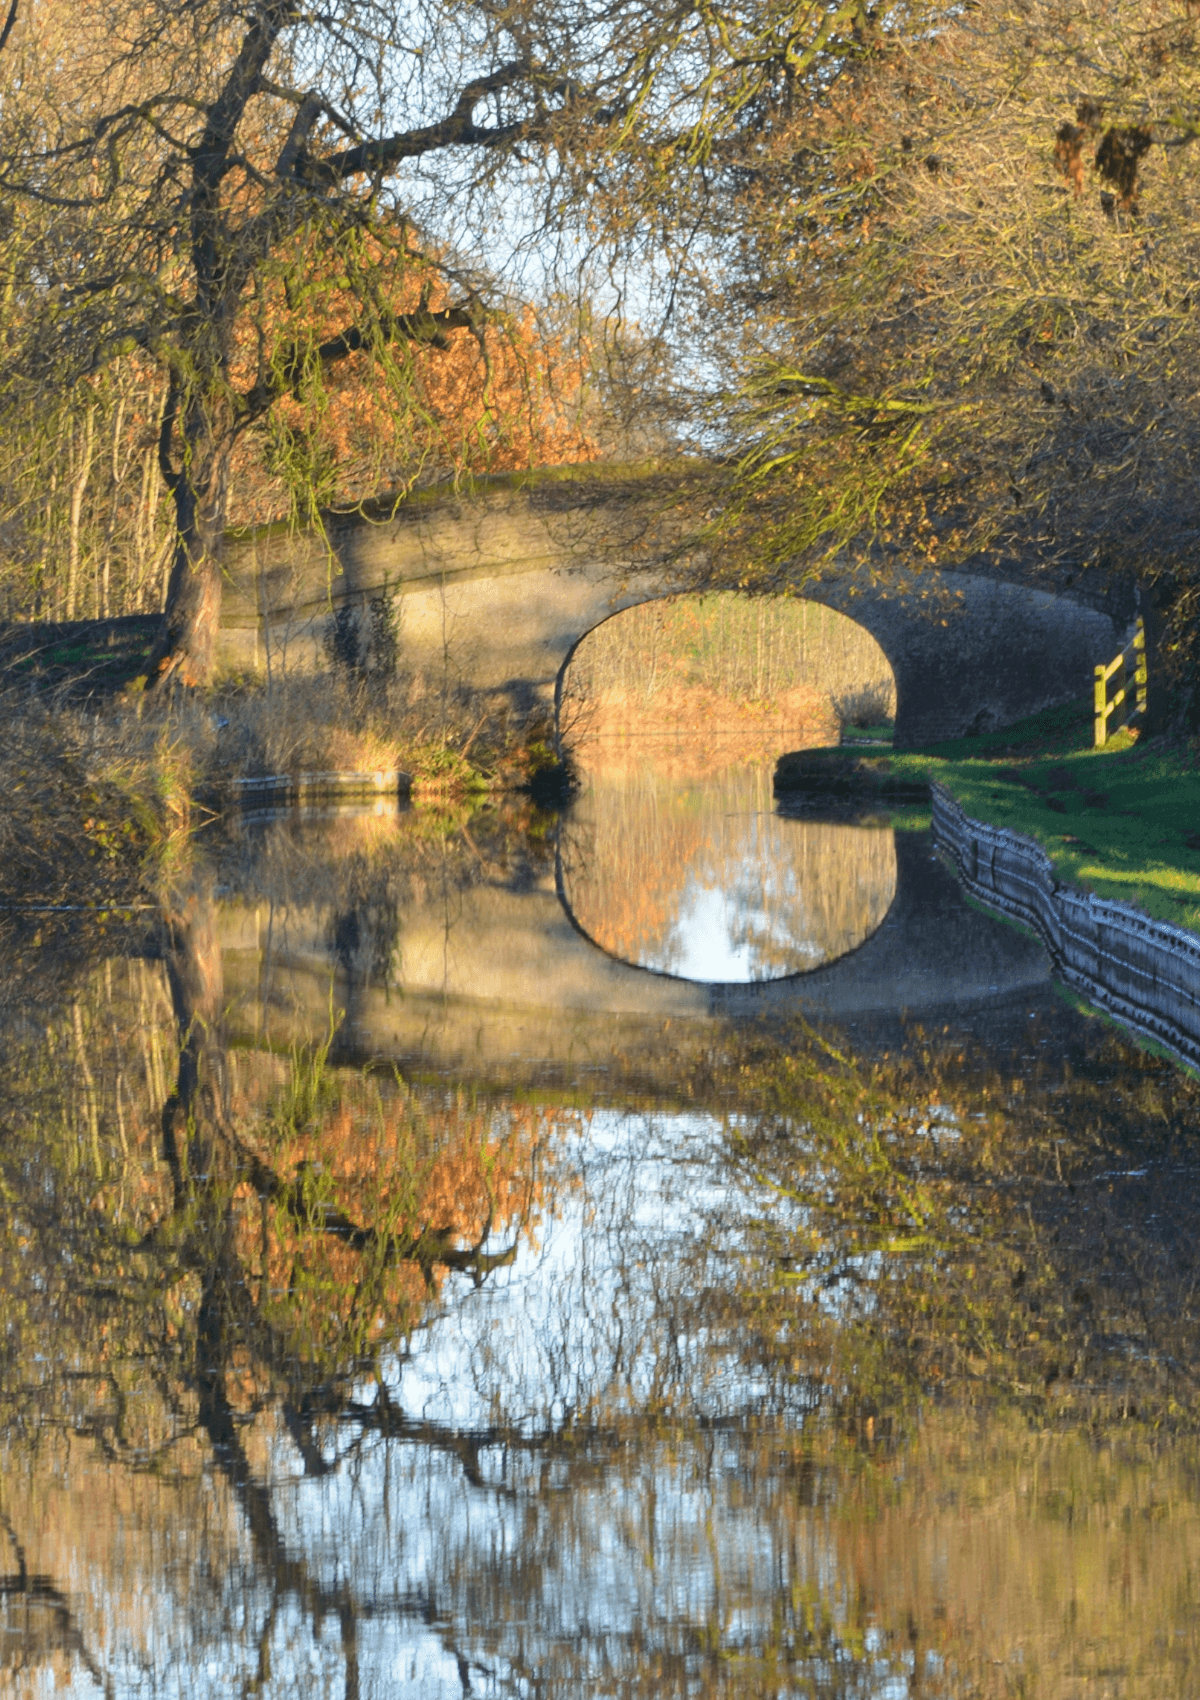 A bridge over the Llangollen Canal, Cheshire, England